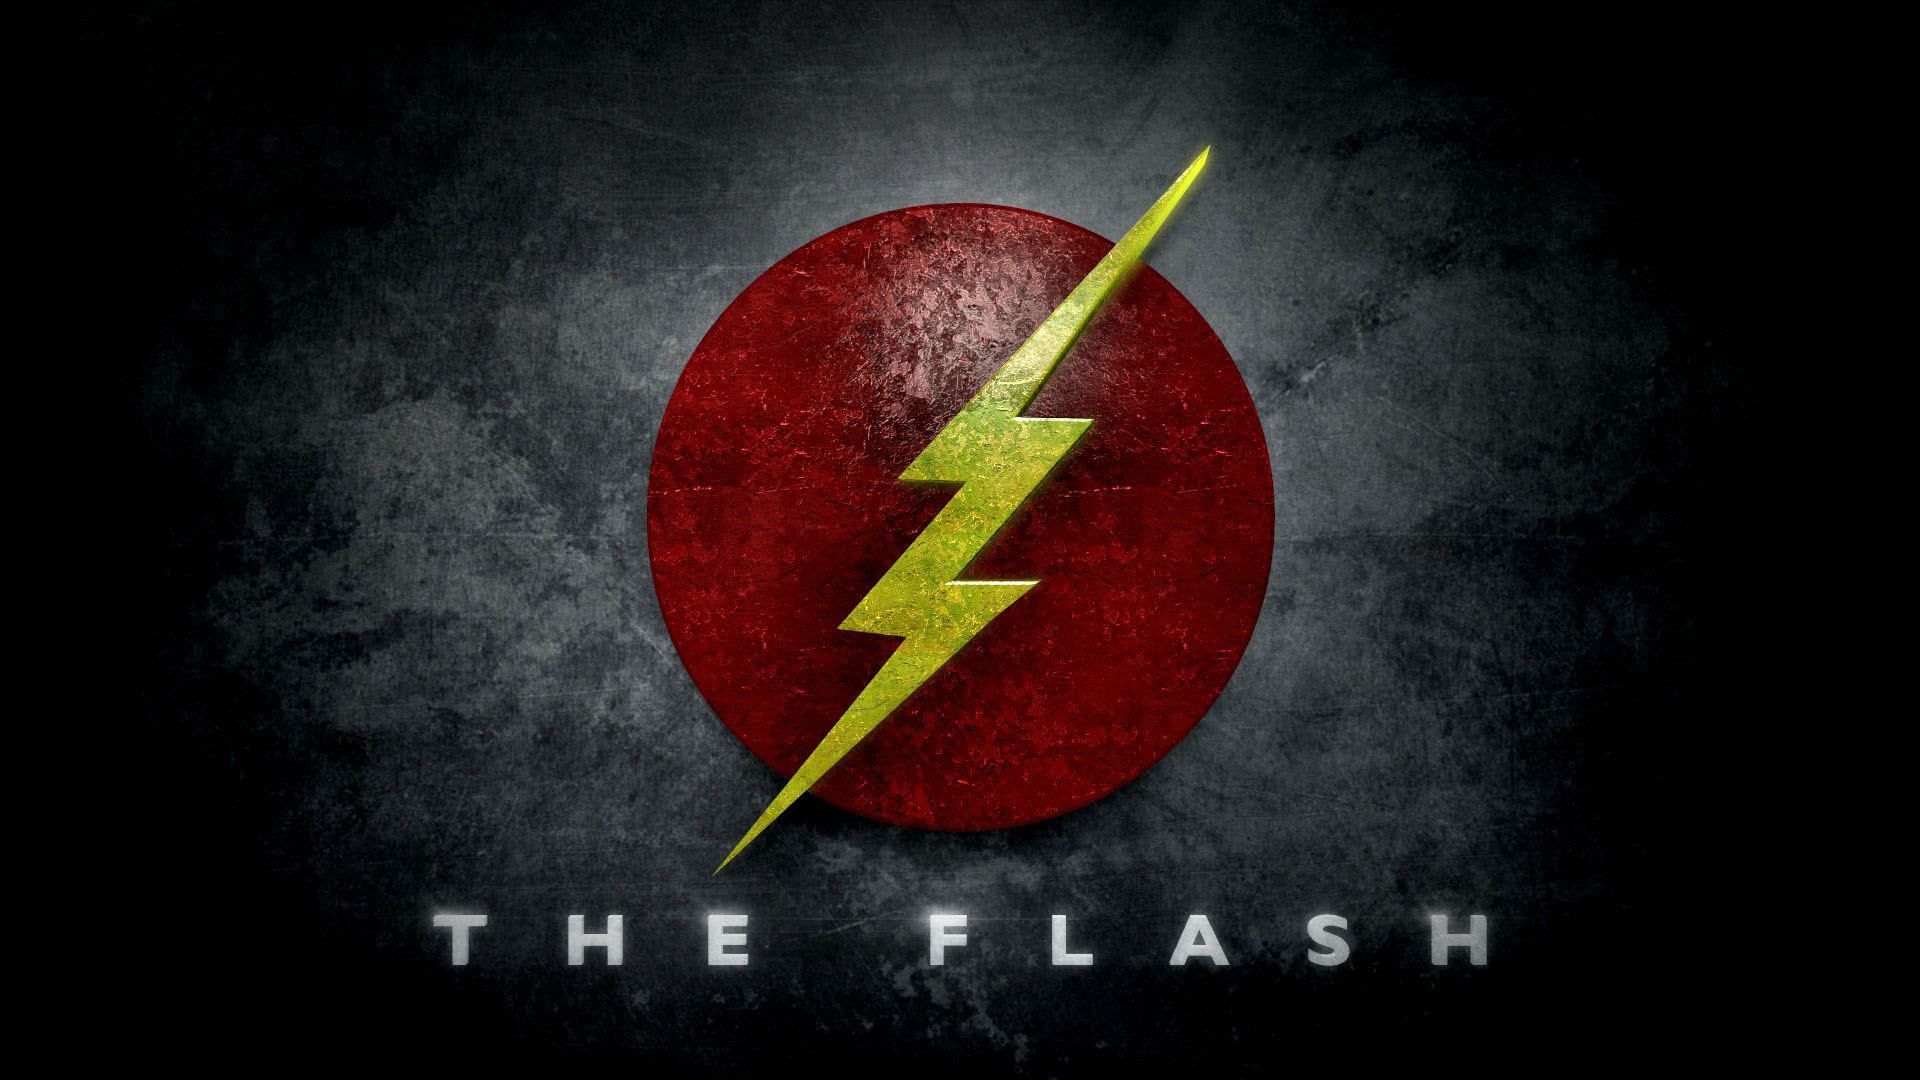 1920x1080 The Flash logo for desktop